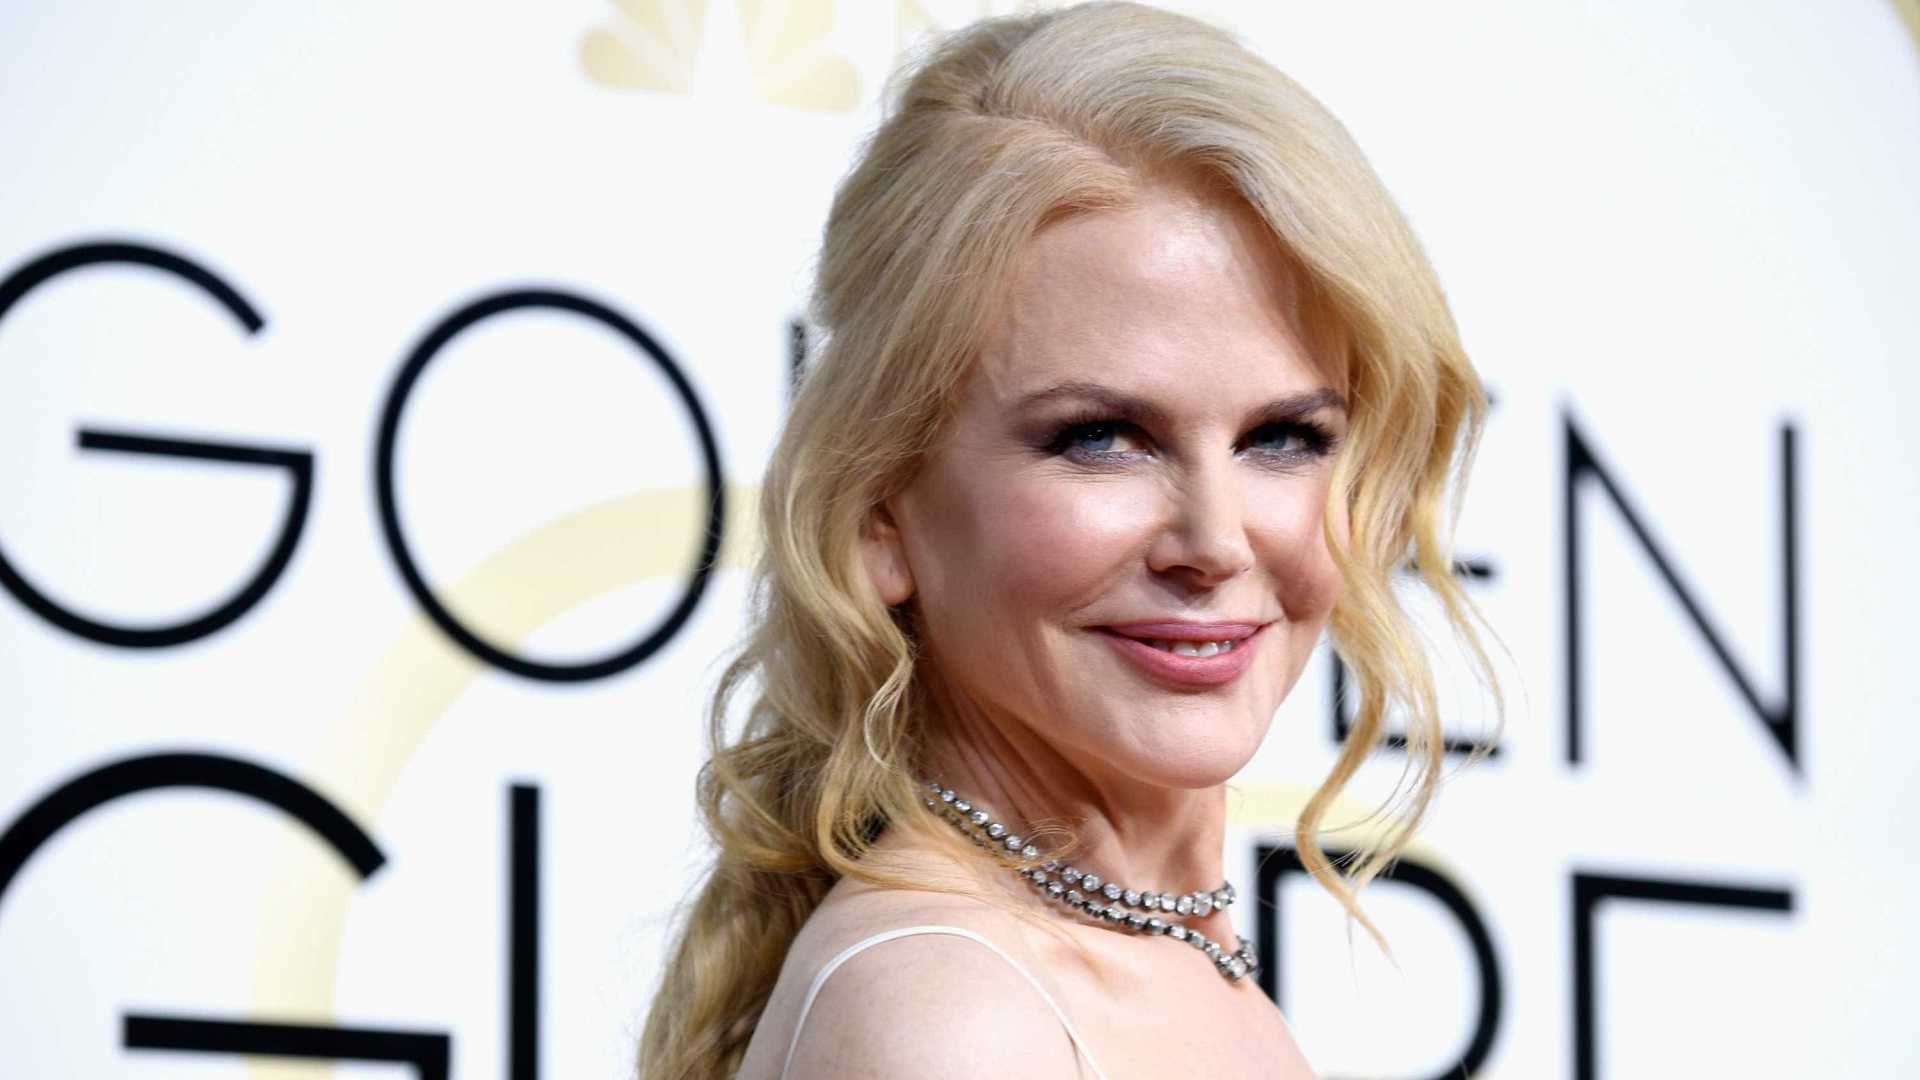 The Undoing | Drama da HBO protagonizado por Nicole Kidman ganha diretora